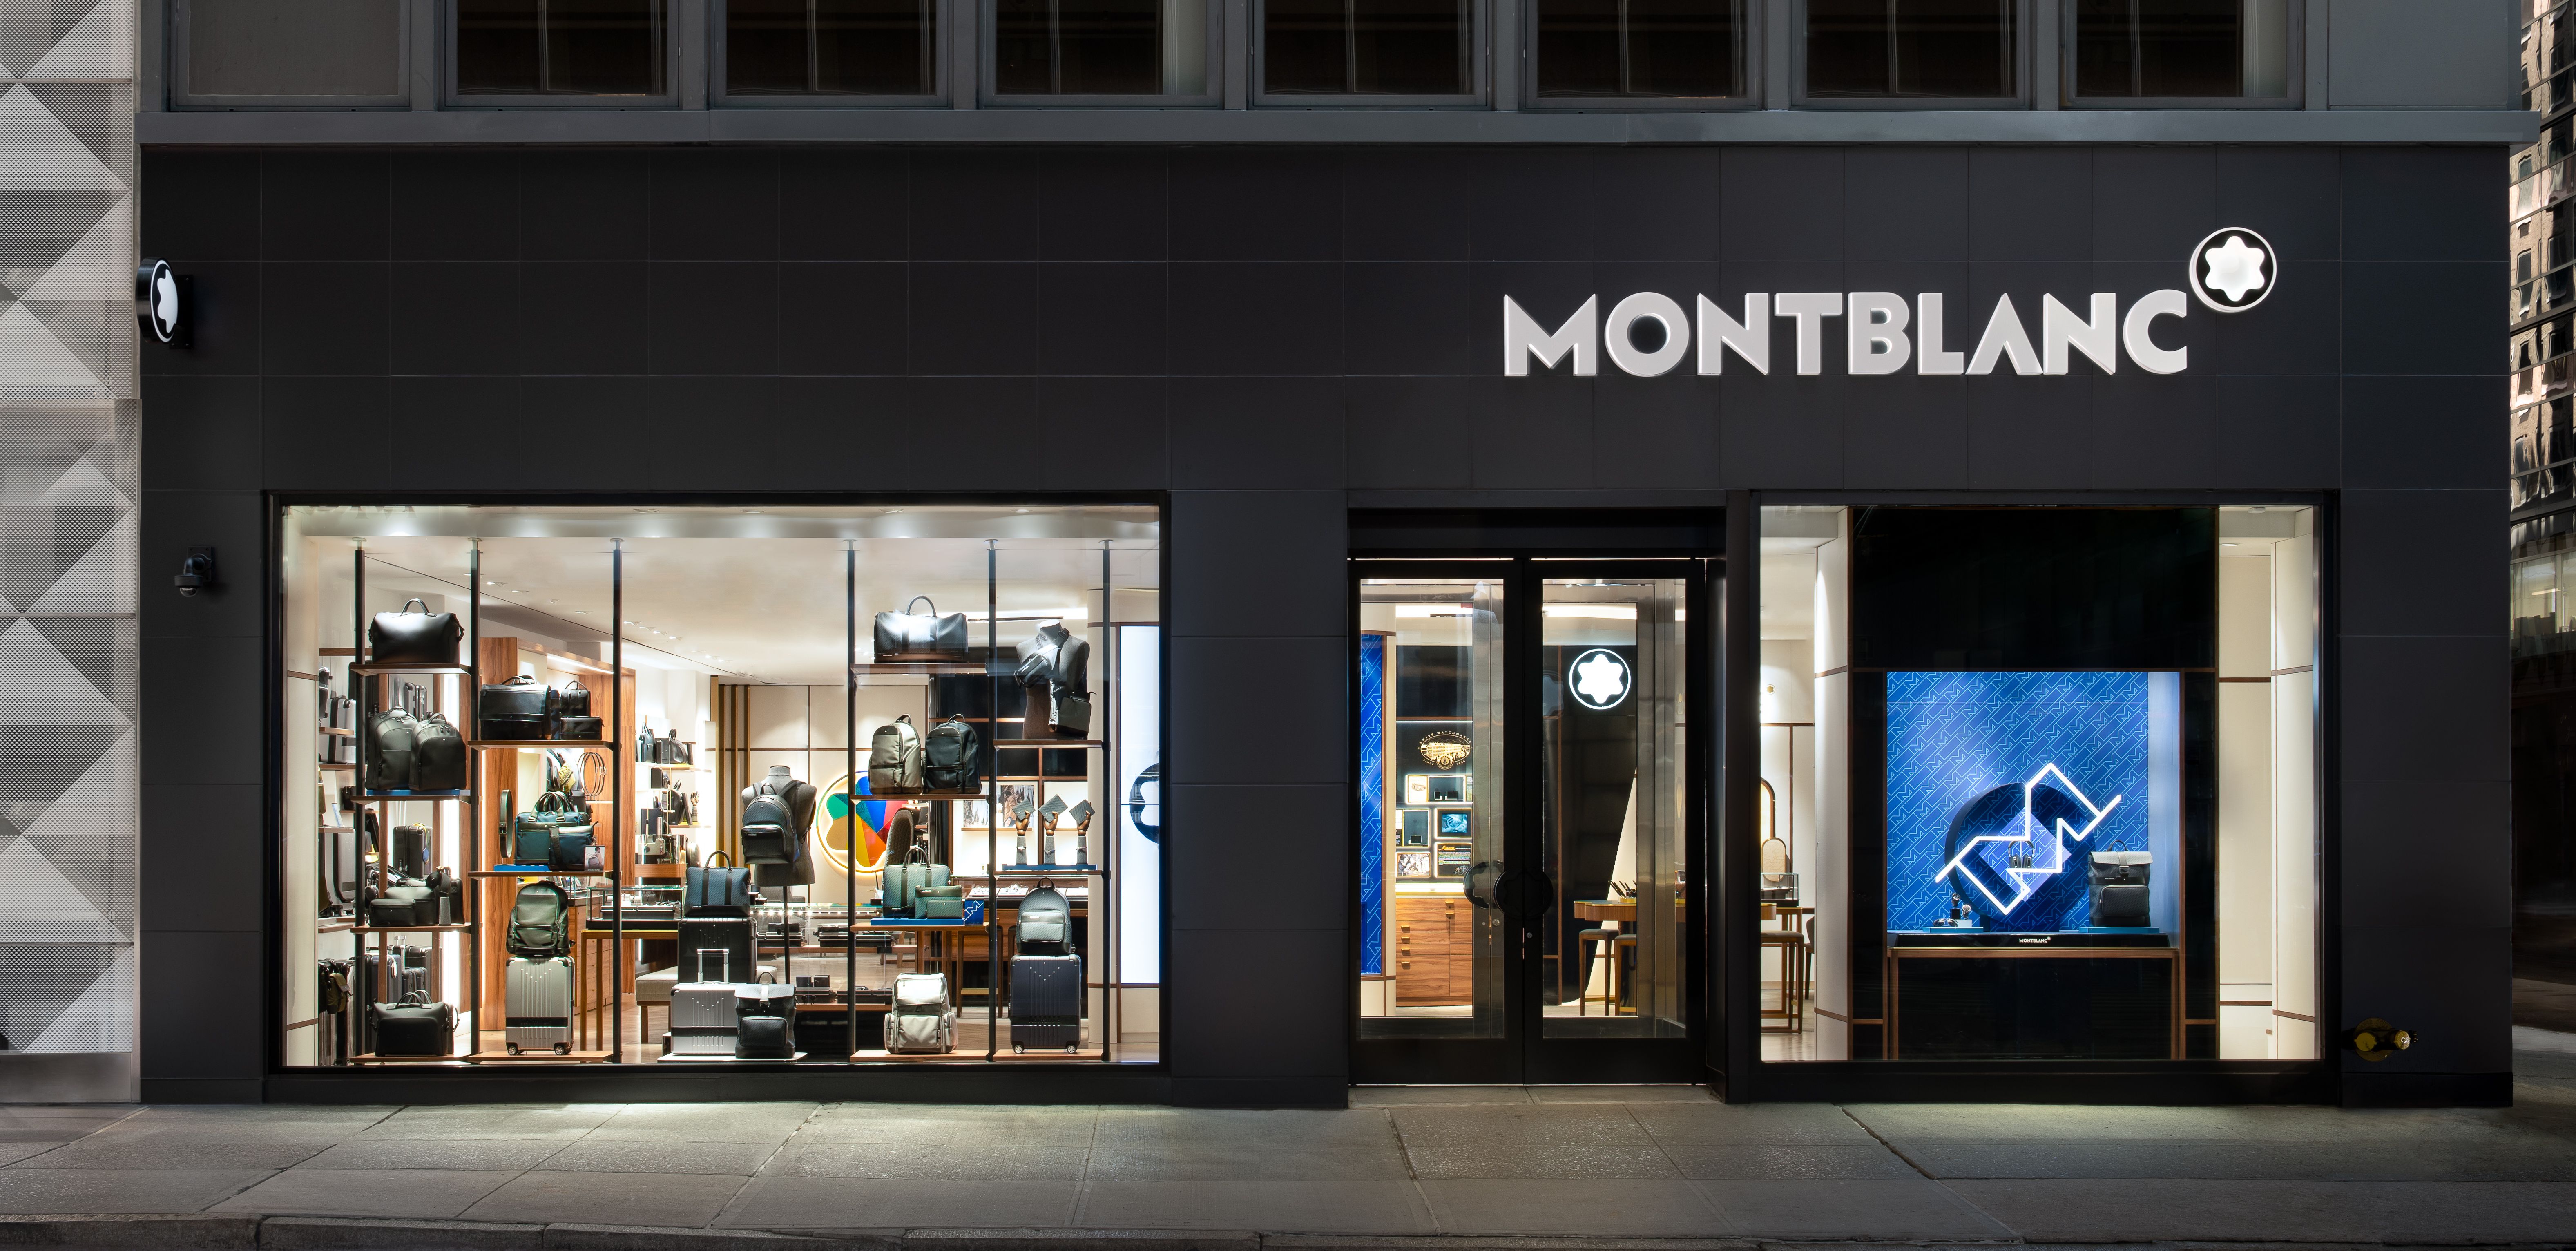 Montblanc Brand & Marketing Strategy - neuroflash